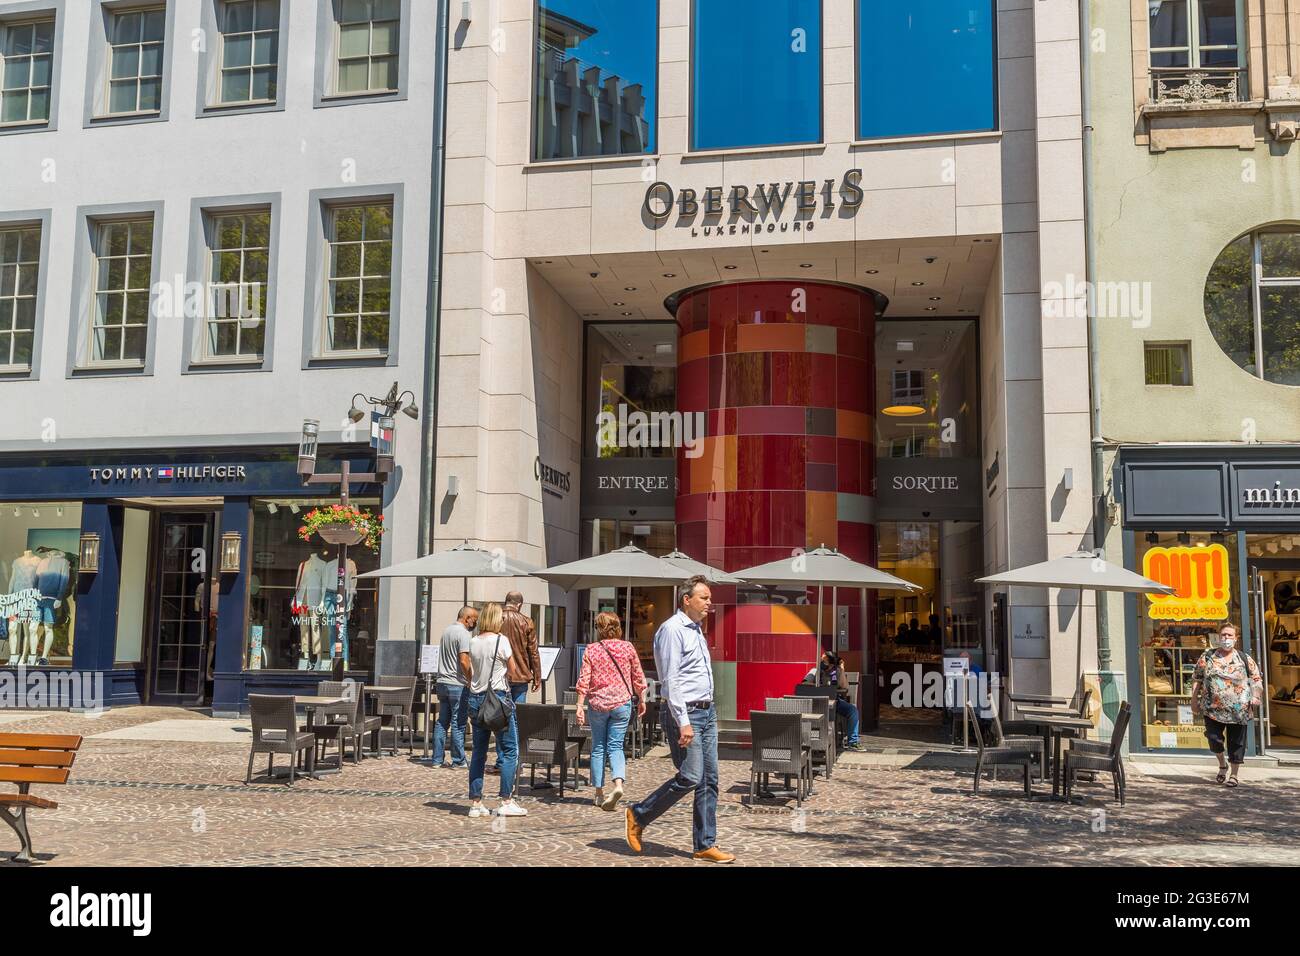 Delicatessen Oberweis in Luxembourg Stock Photo